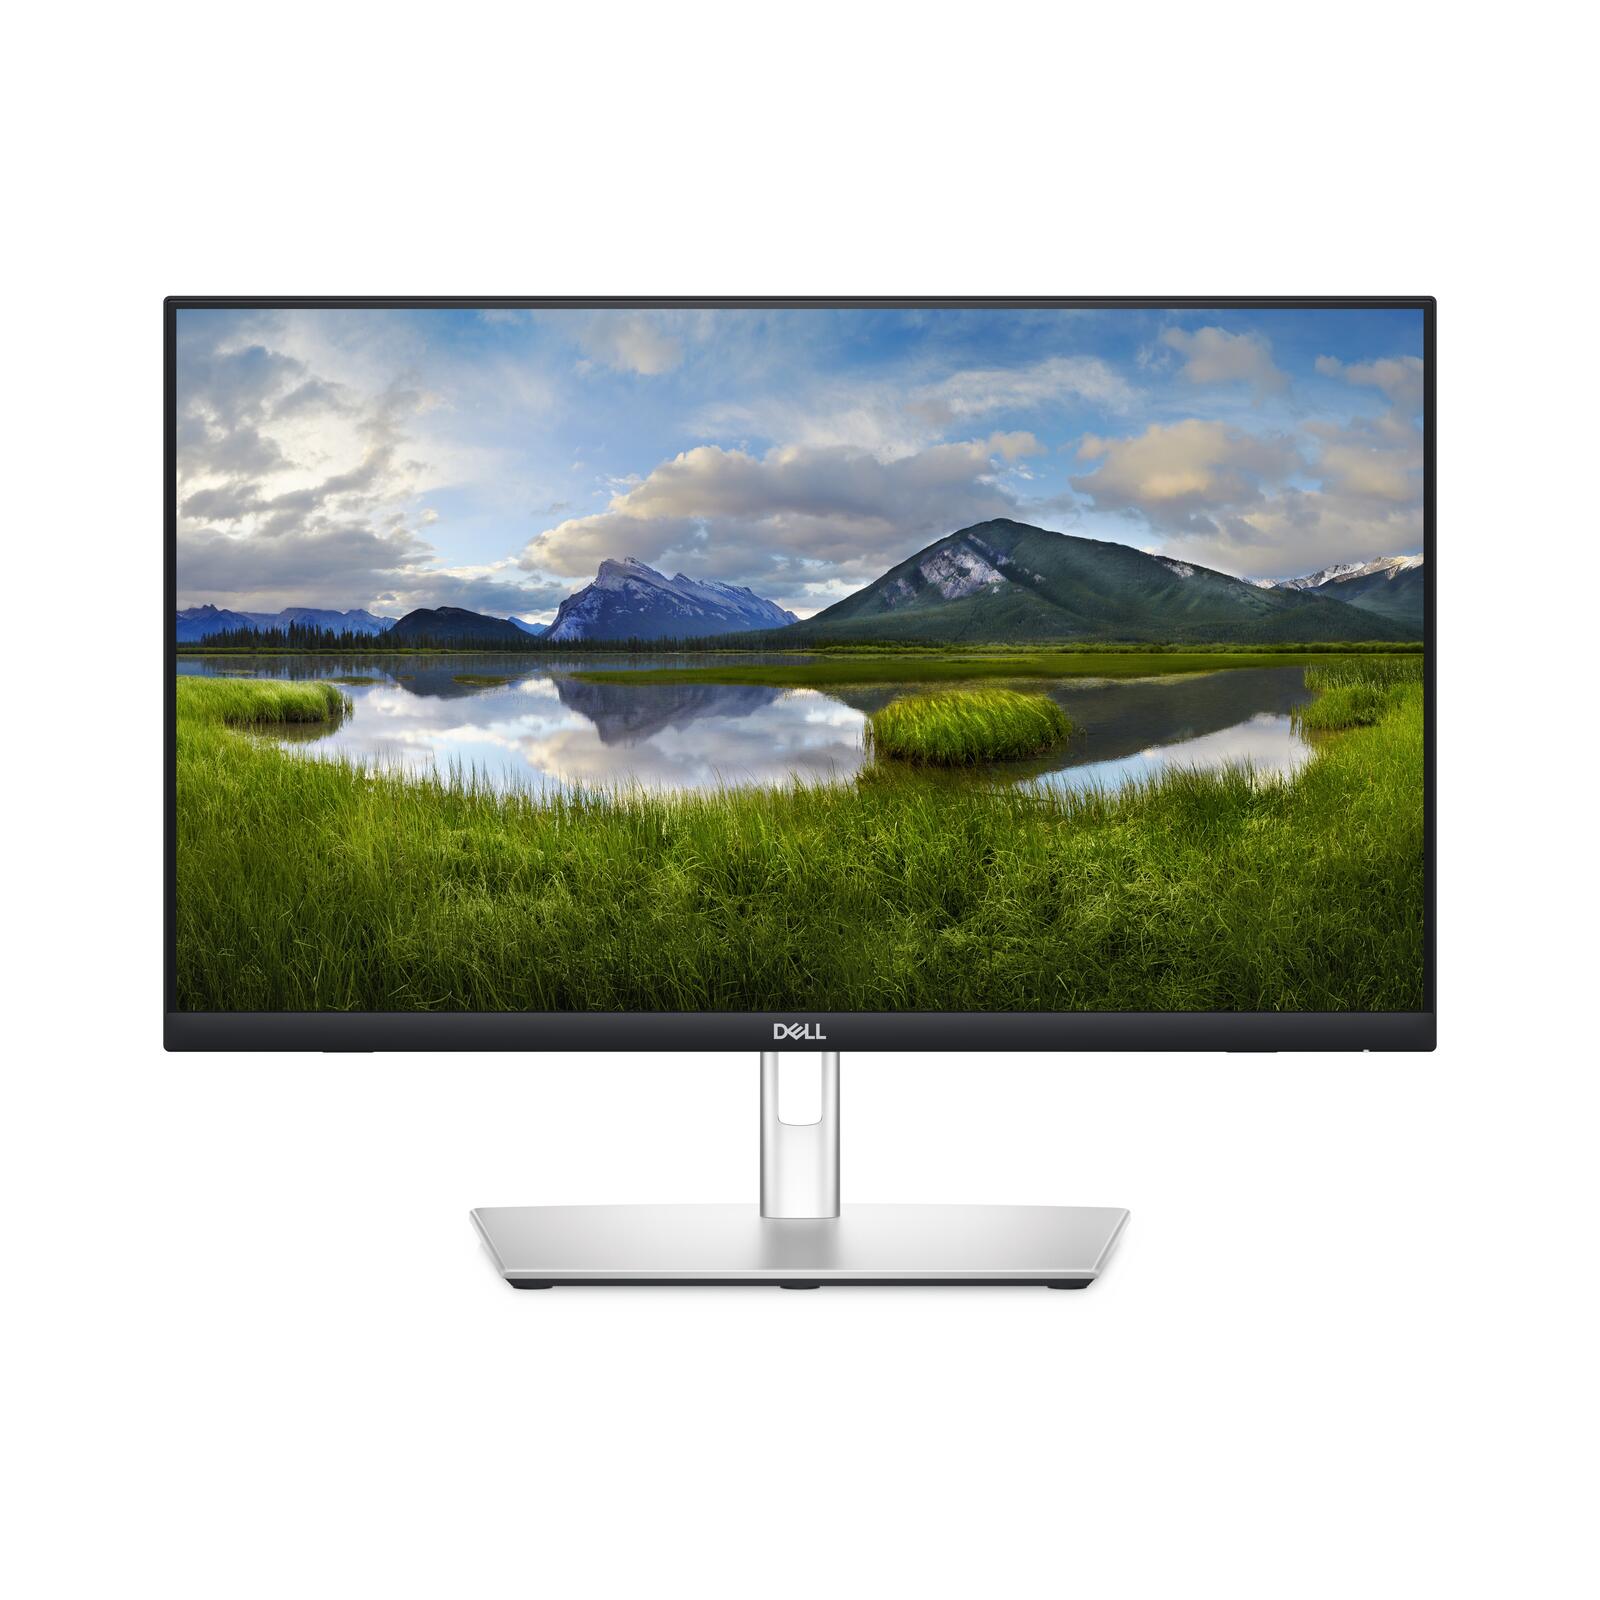 Dell P2424HT - LED monitor - Full HD (1080p) - 24